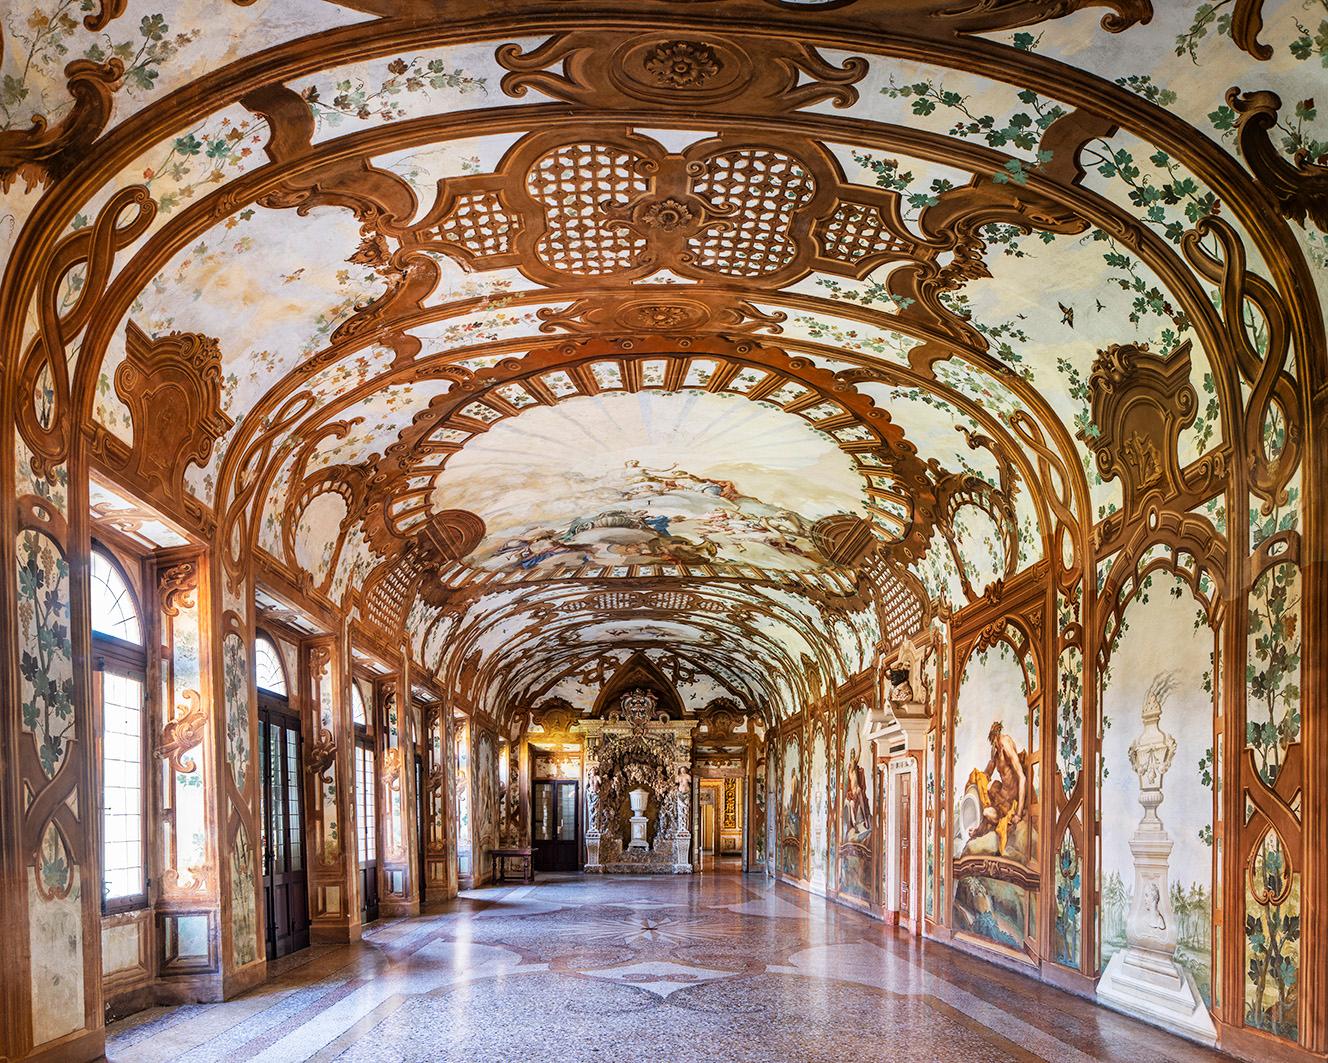 Reinhard Görner Still-Life Photograph - Sala dei Fiumi I (Hall of Rivers), Ducal Palace of Mantua, Italy